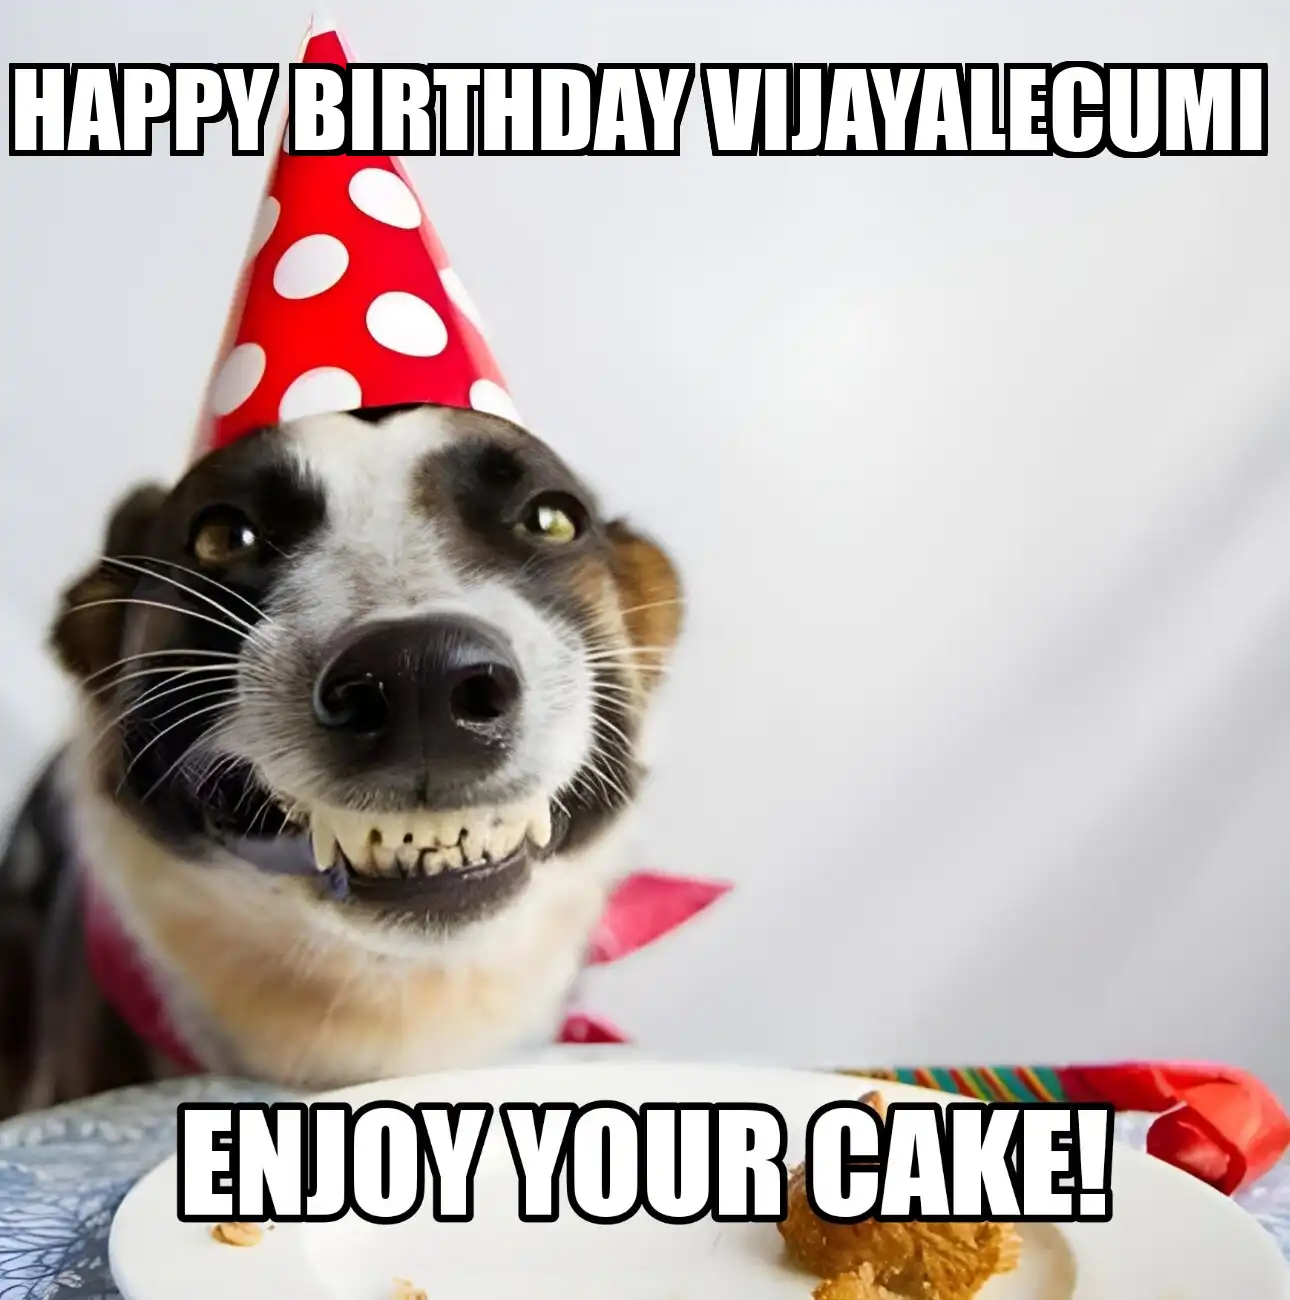 Happy Birthday Vijayalecumi Enjoy Your Cake Dog Meme